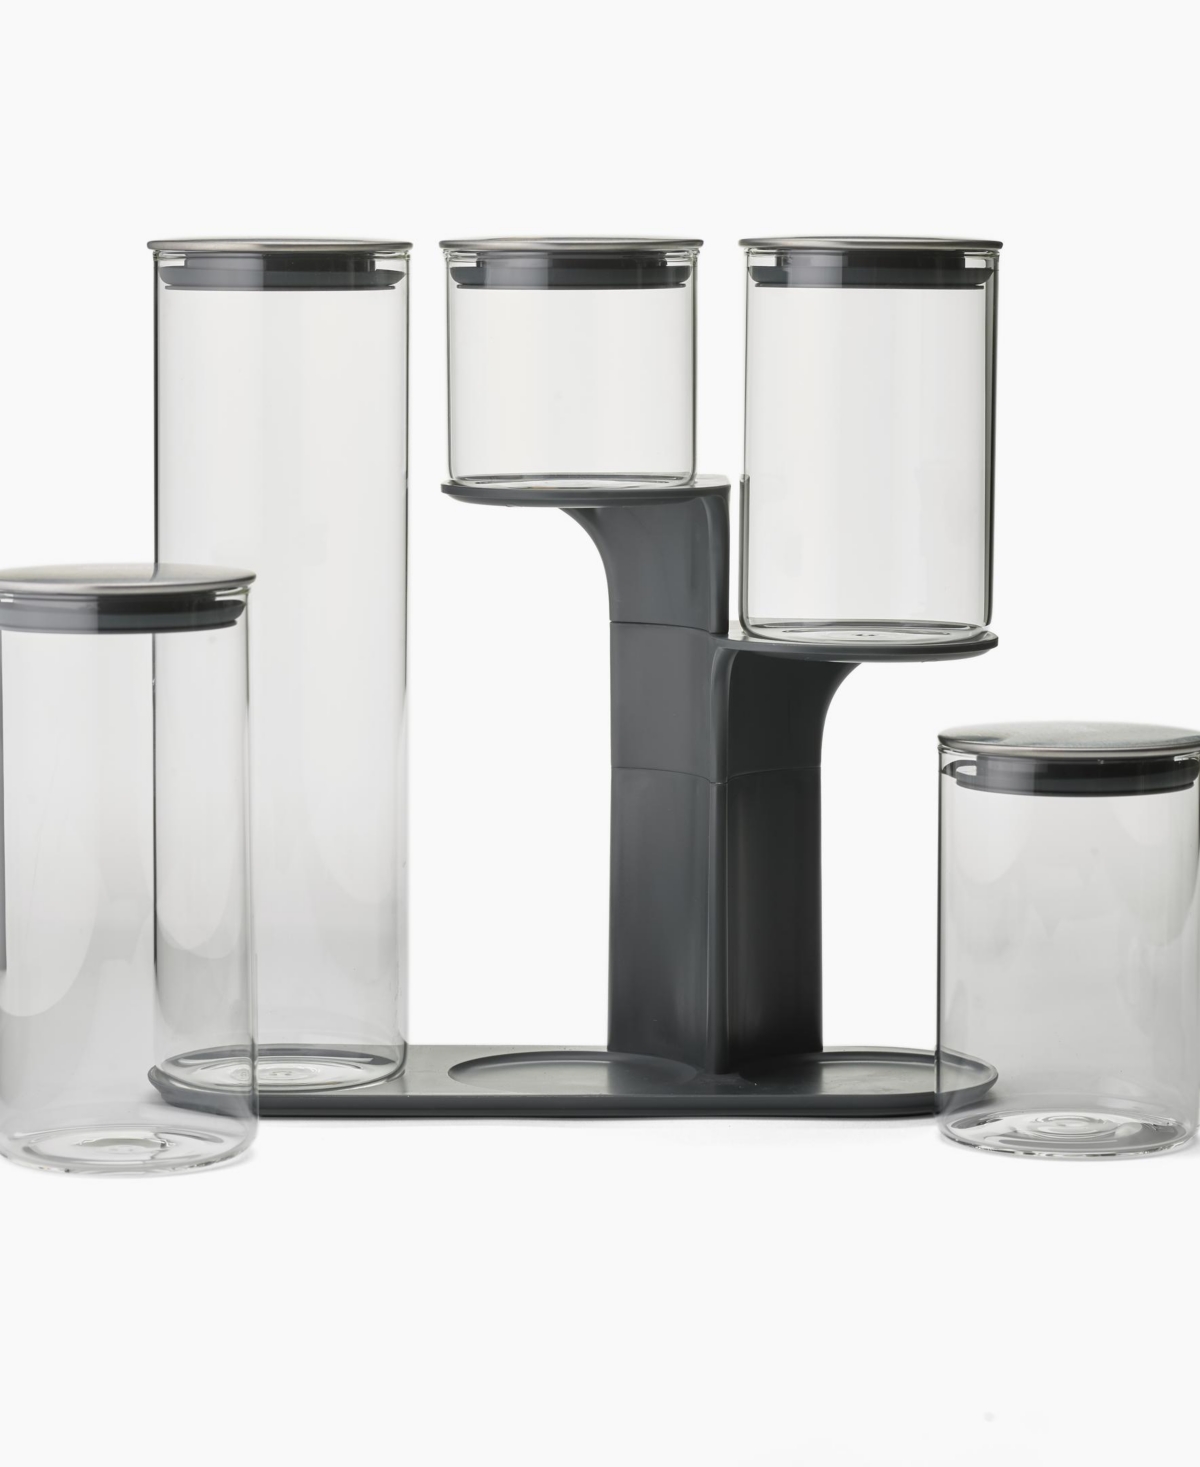 Joseph Joseph Podium 5-piece Glass Storage Jar Set With Stand In Gray